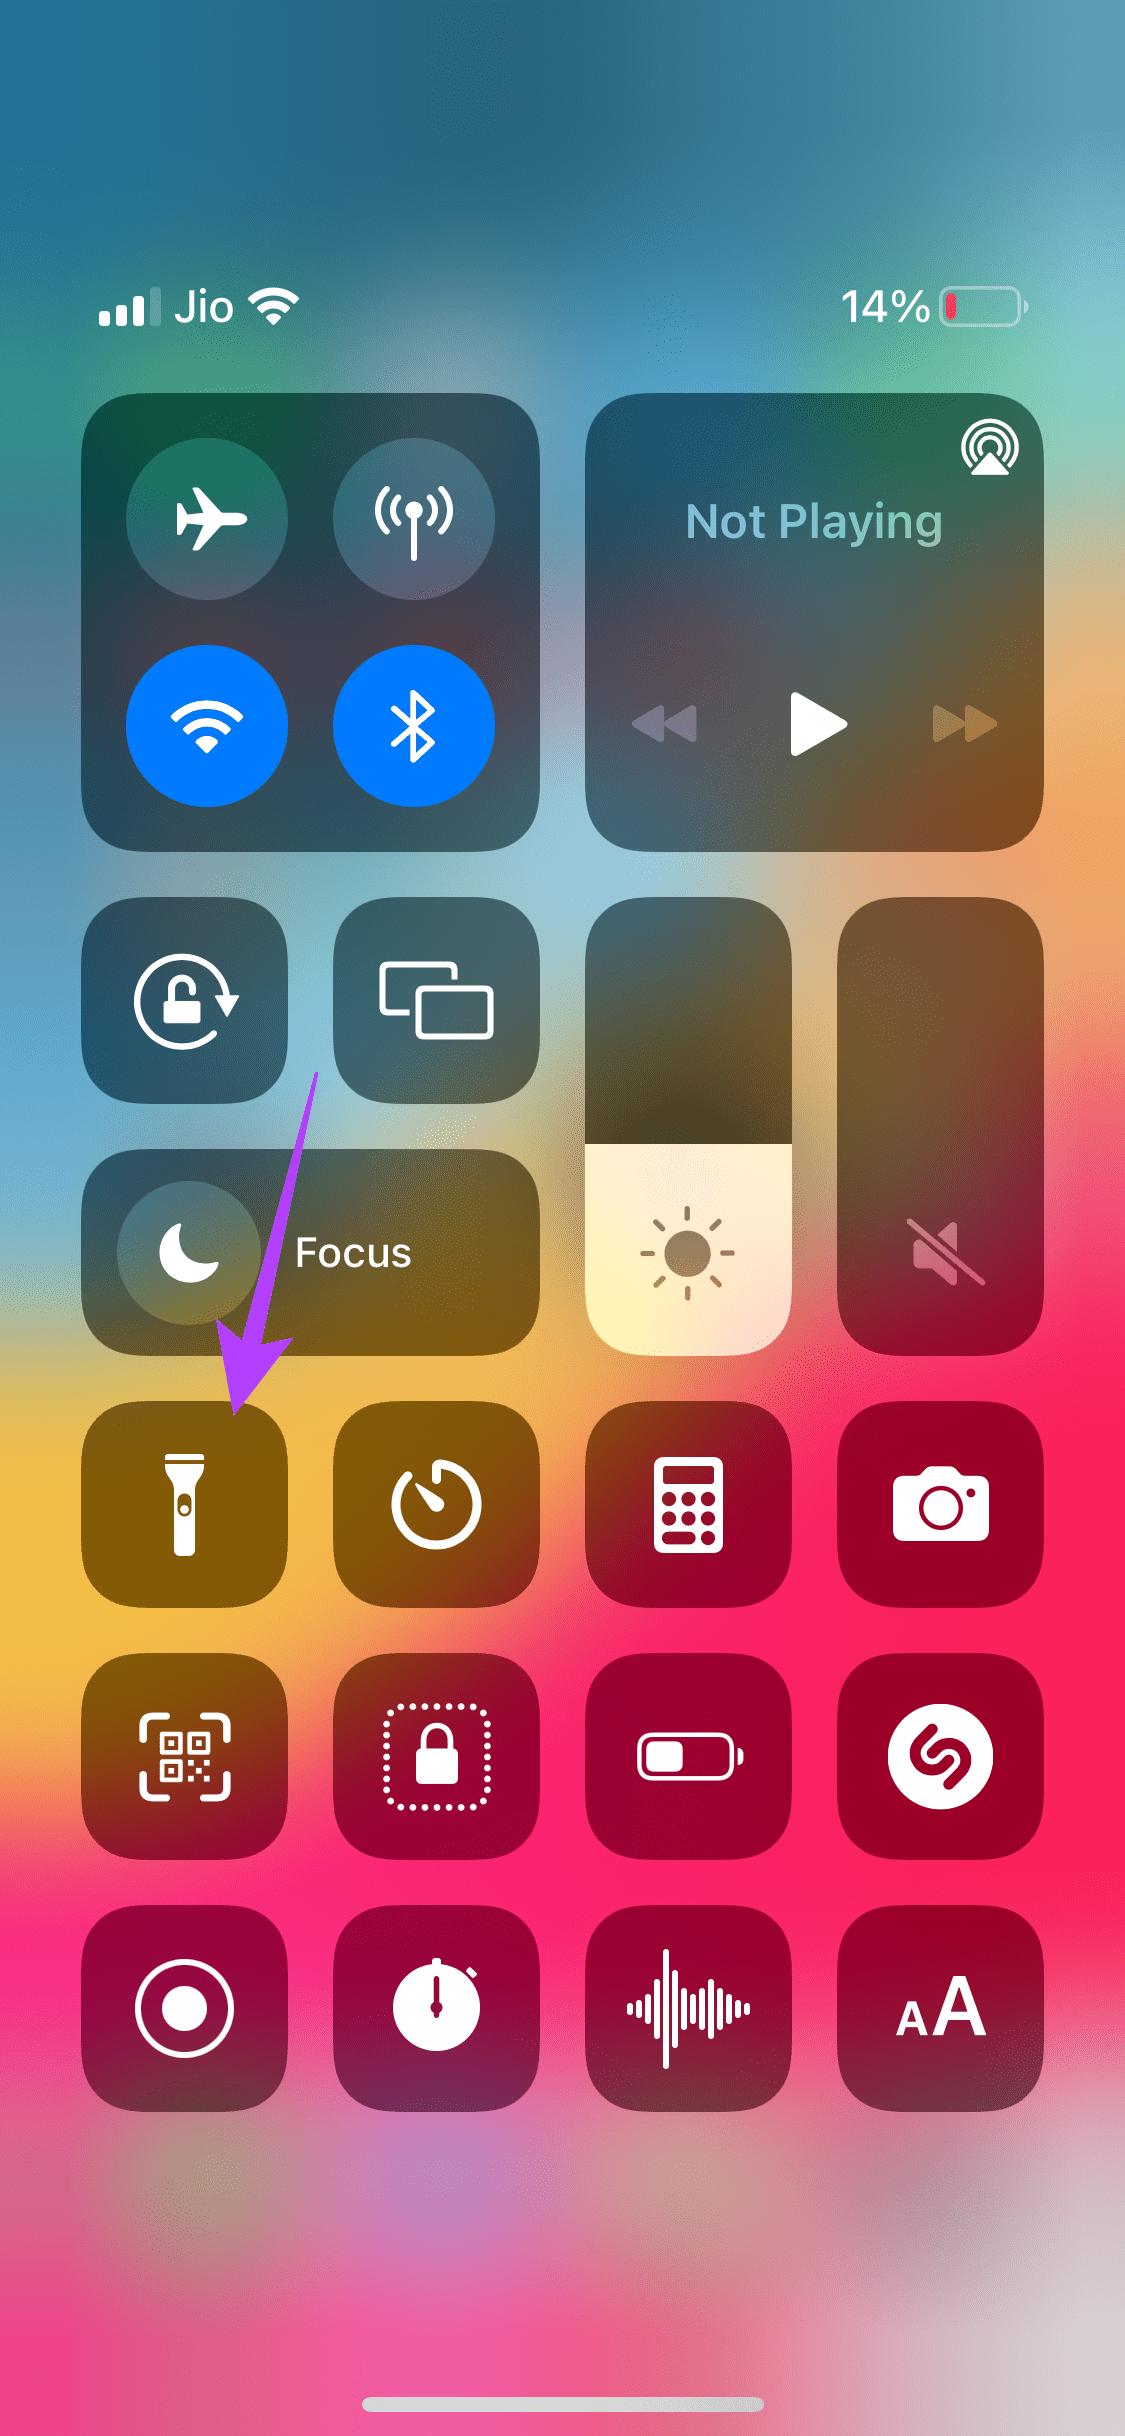 Flashlight toggle on iPhone